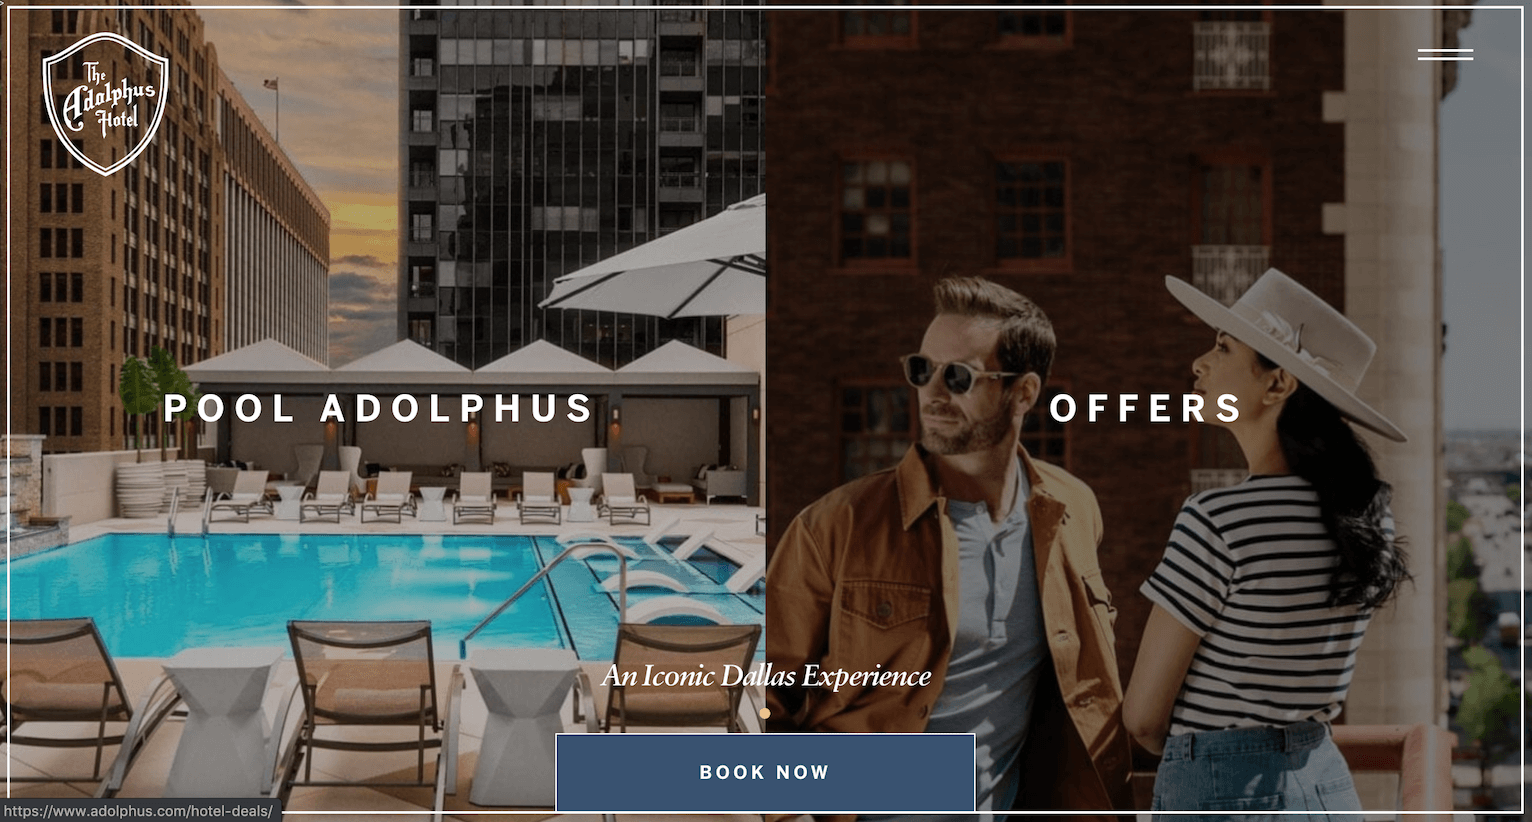 Adolphus Hotel Website new